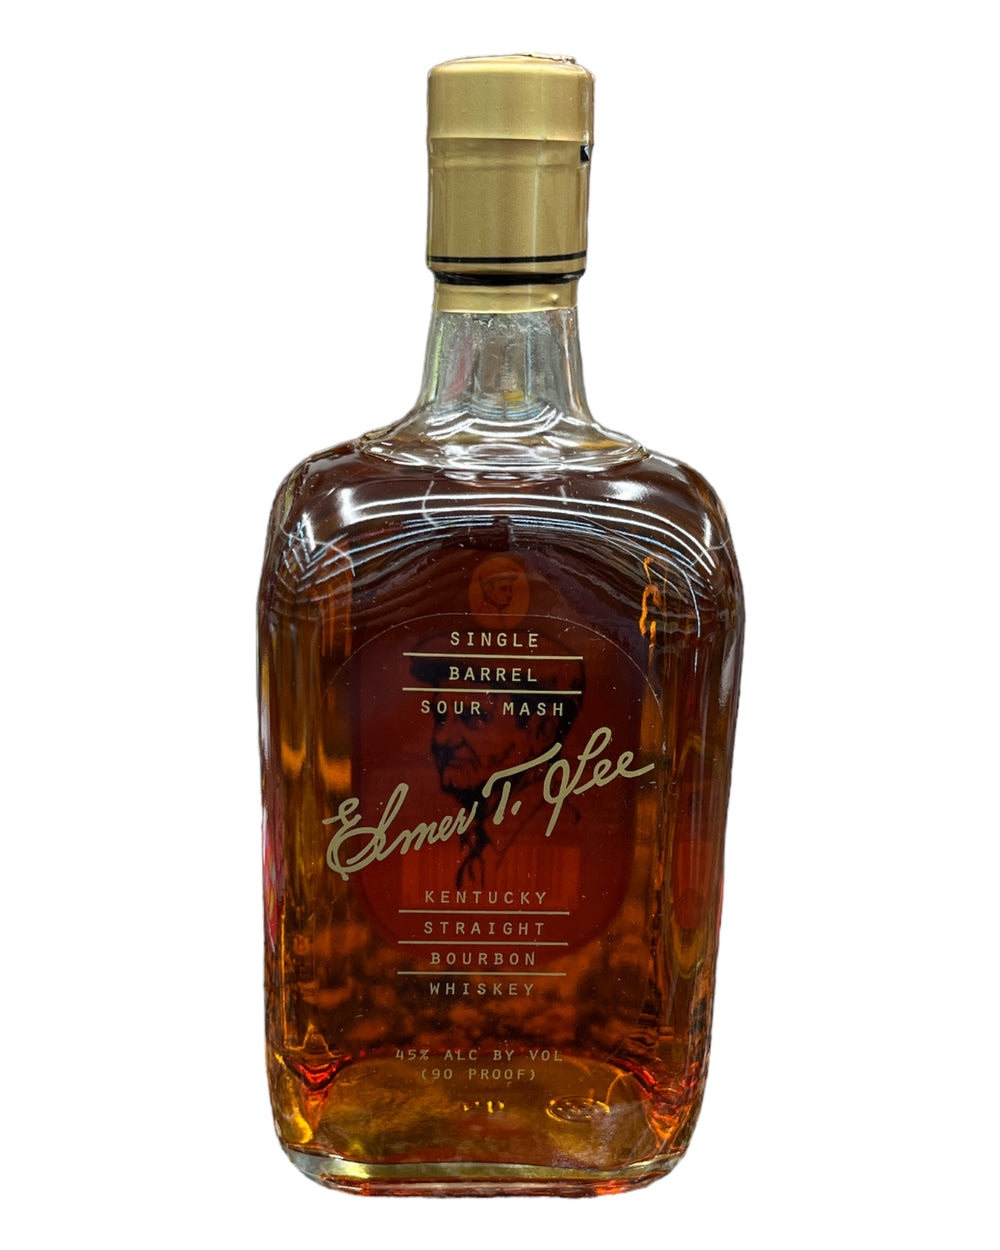 Elmer T. Lee Single Barrel Sour Mash Bourbon